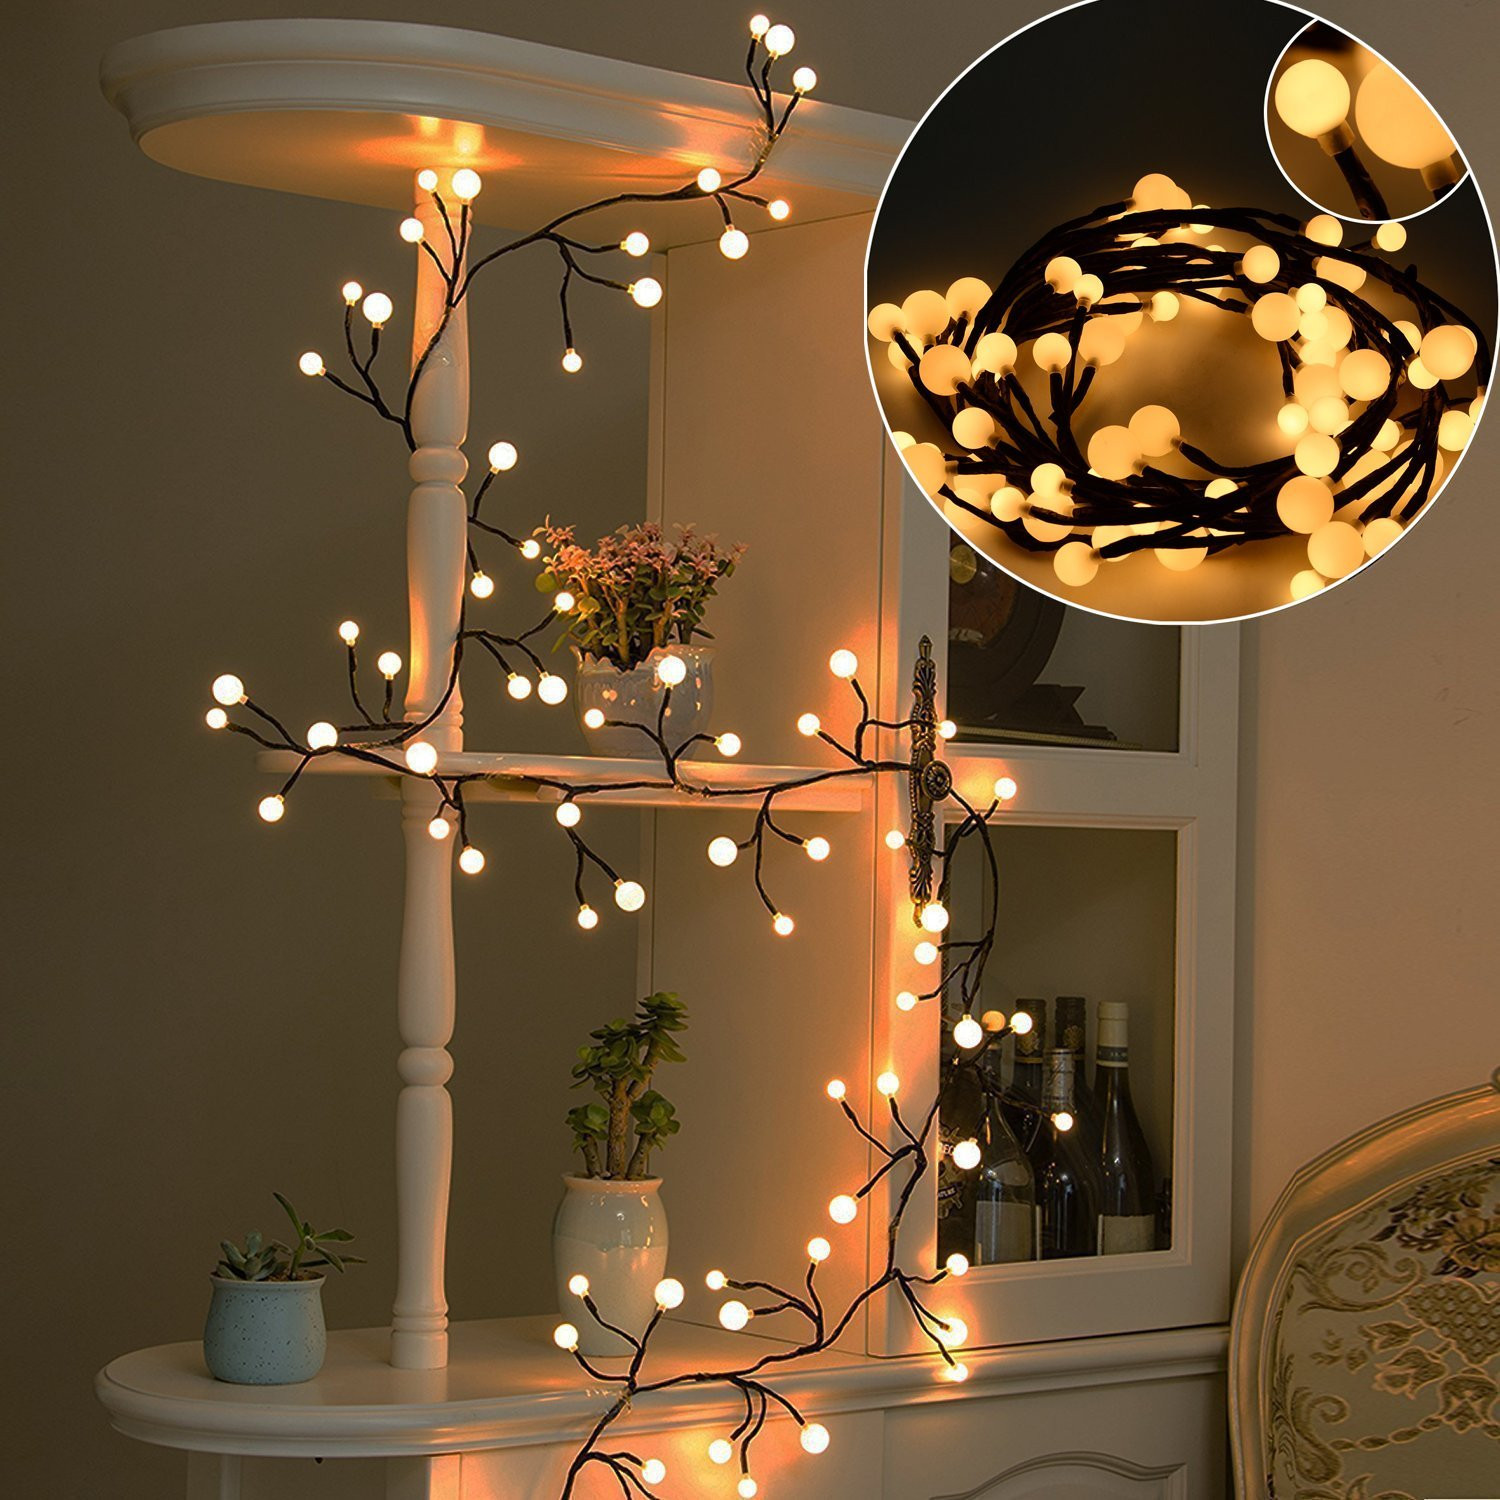 Decorative Lights For Living Room
 23FT Long LED String Lights Warm White Christmas